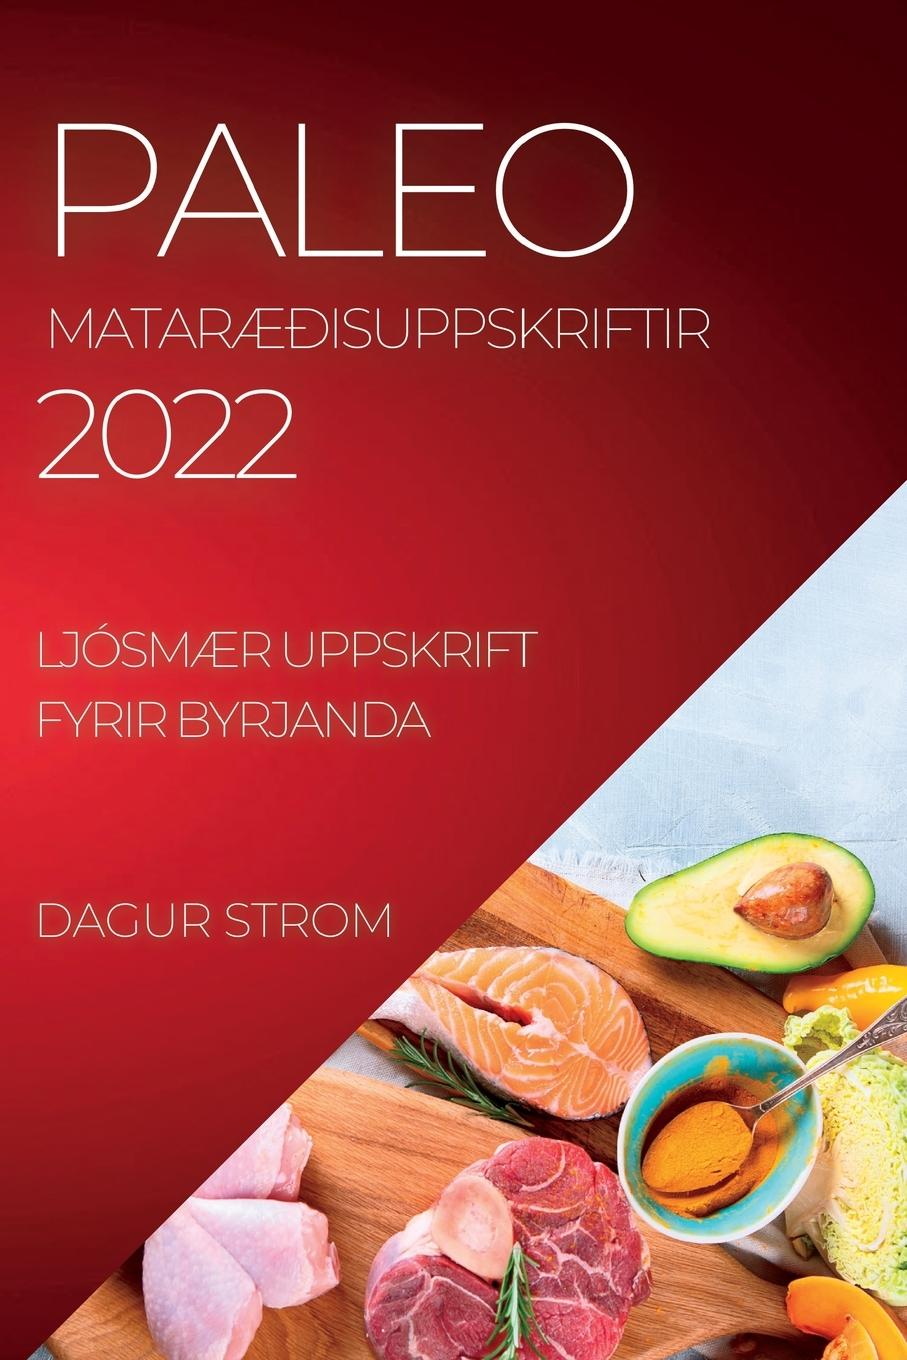 Kniha Paleo MatarAEdisuppskriftir 2022 